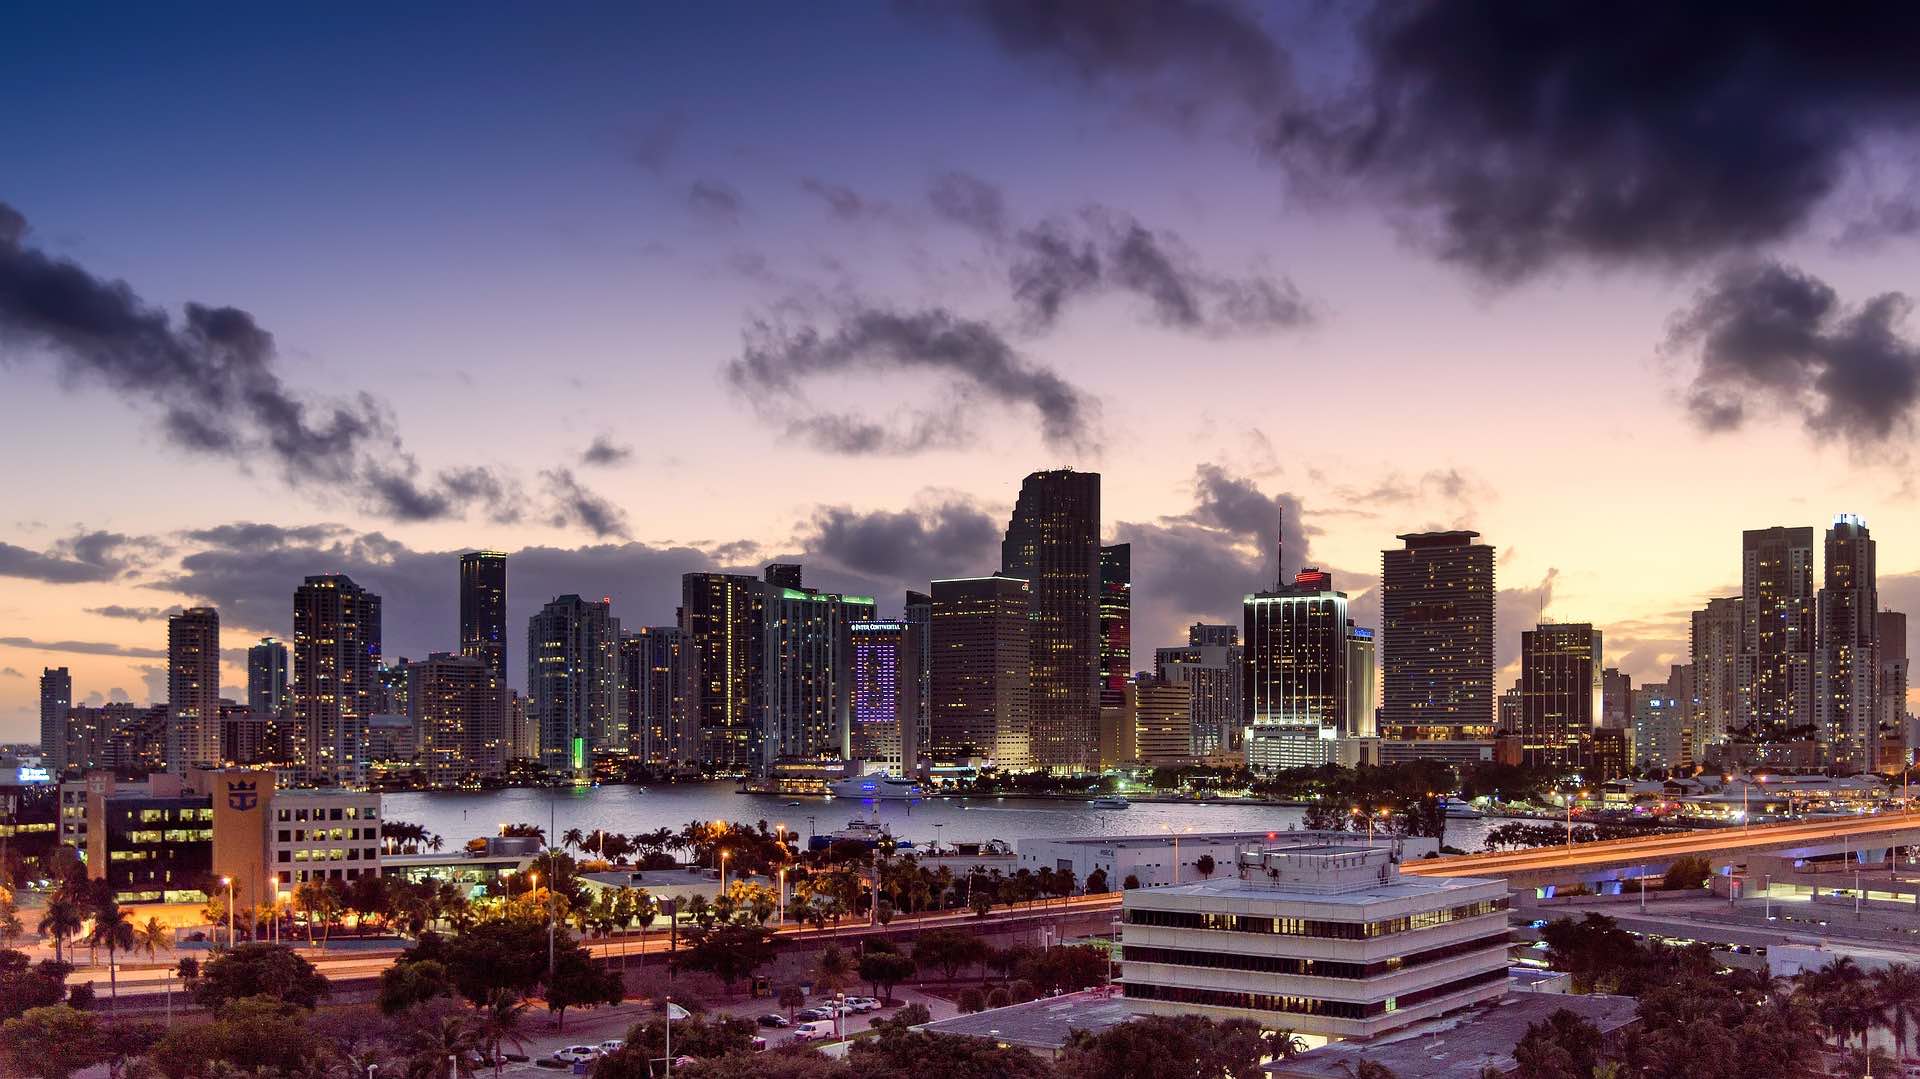 Ralph Lauren Accepts Crypto in Miami